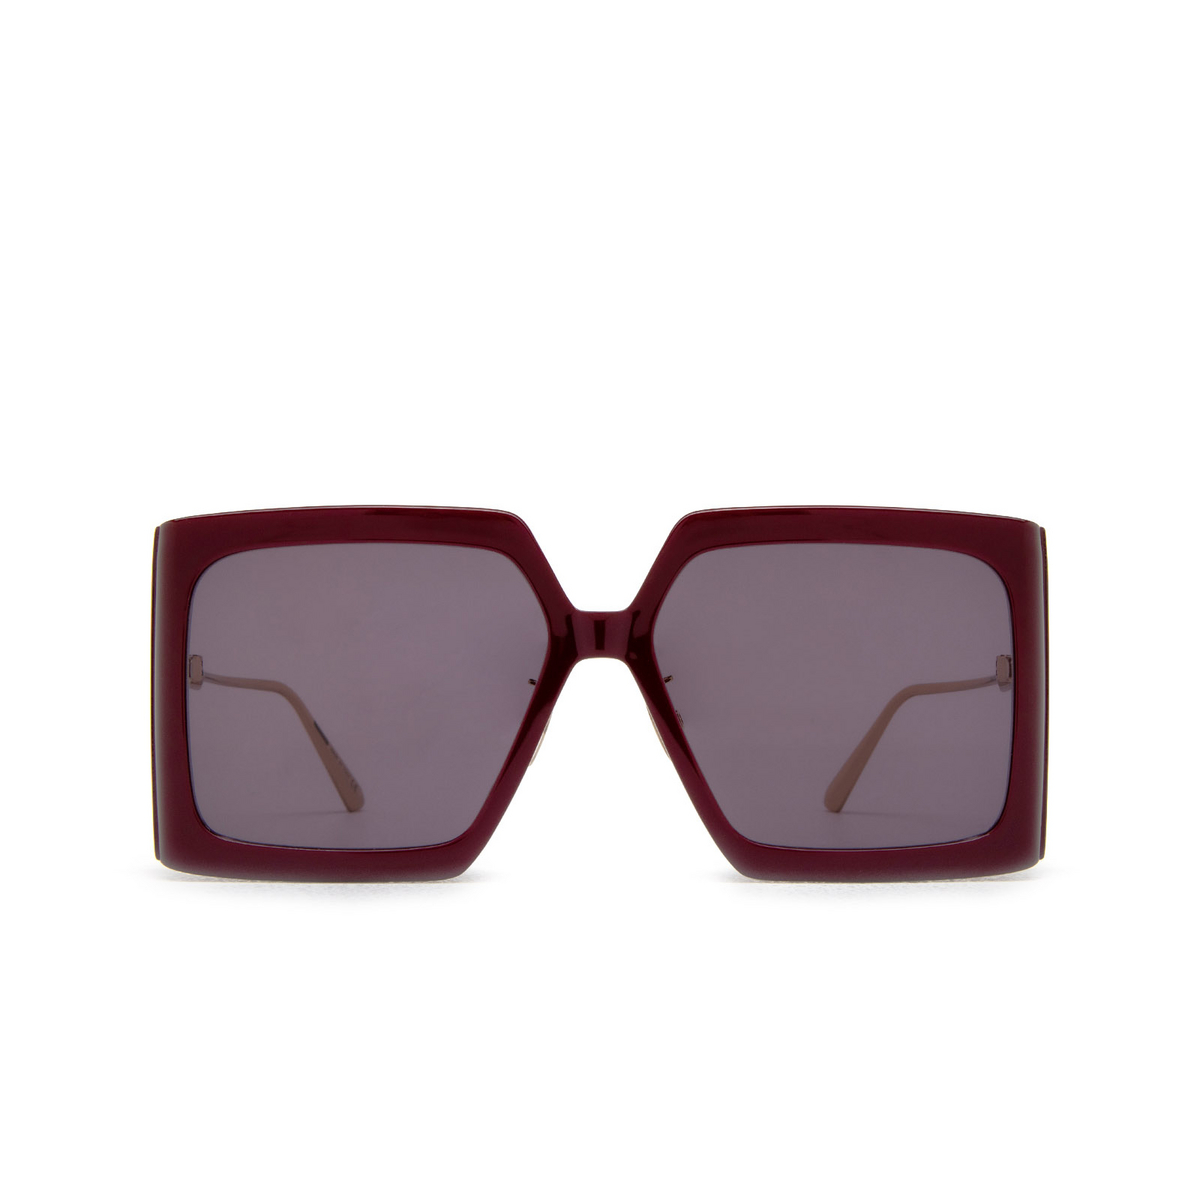 Dior DIORSOLAR S2U Sunglasses 35D0 Bordeaux - front view